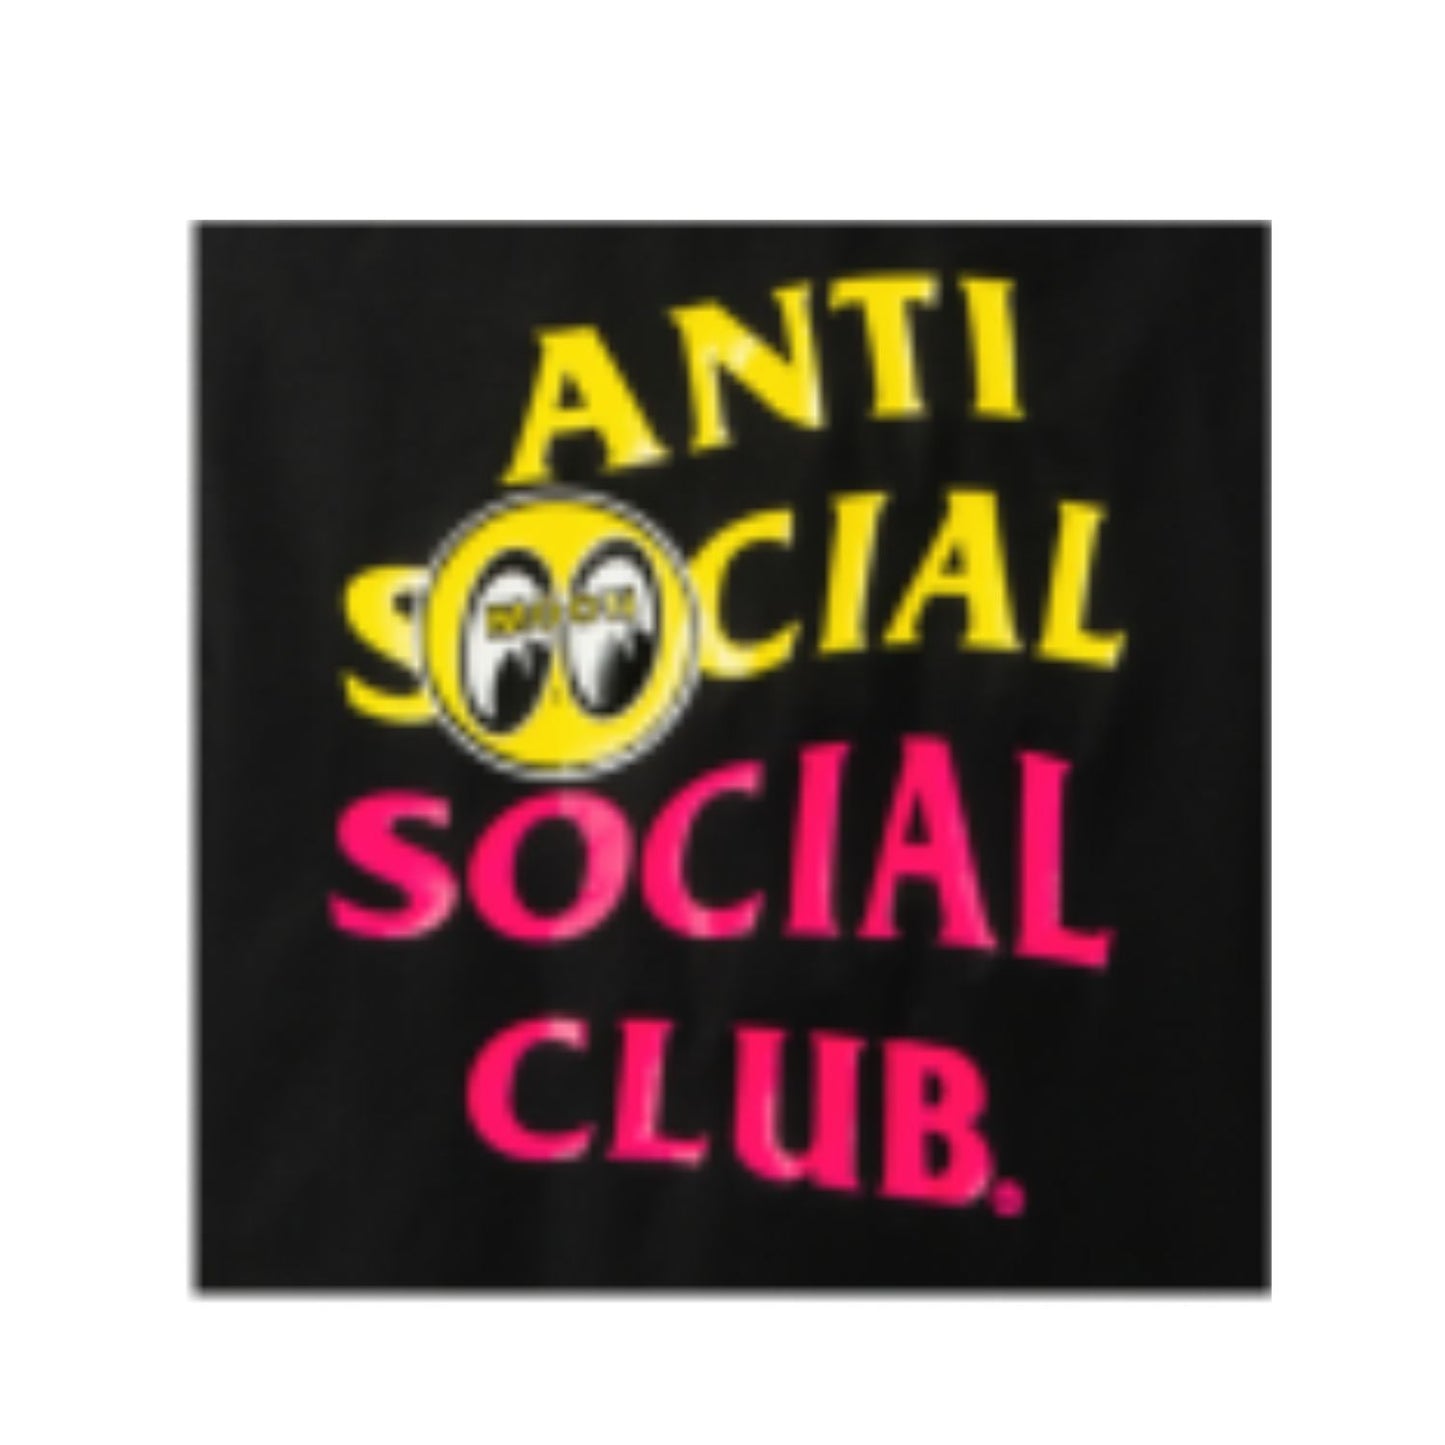 Anti Social Social Club X Mooneyes Curbed Coaches Jacket  Black